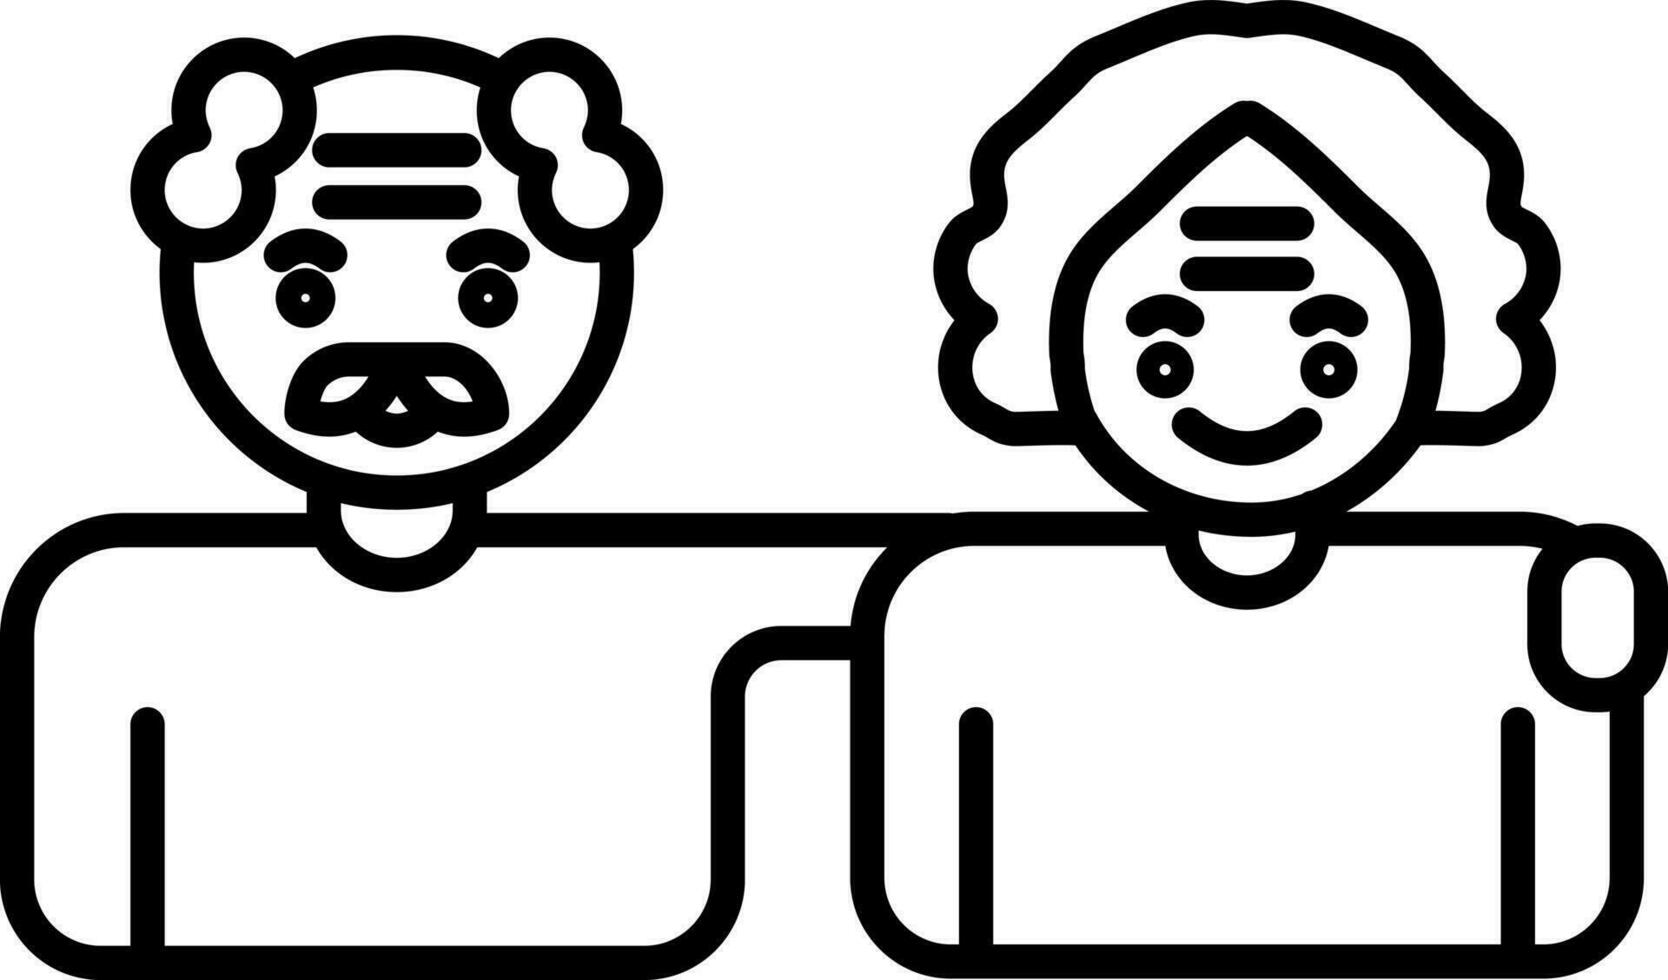 Black line art illustration of relationship icon. vector